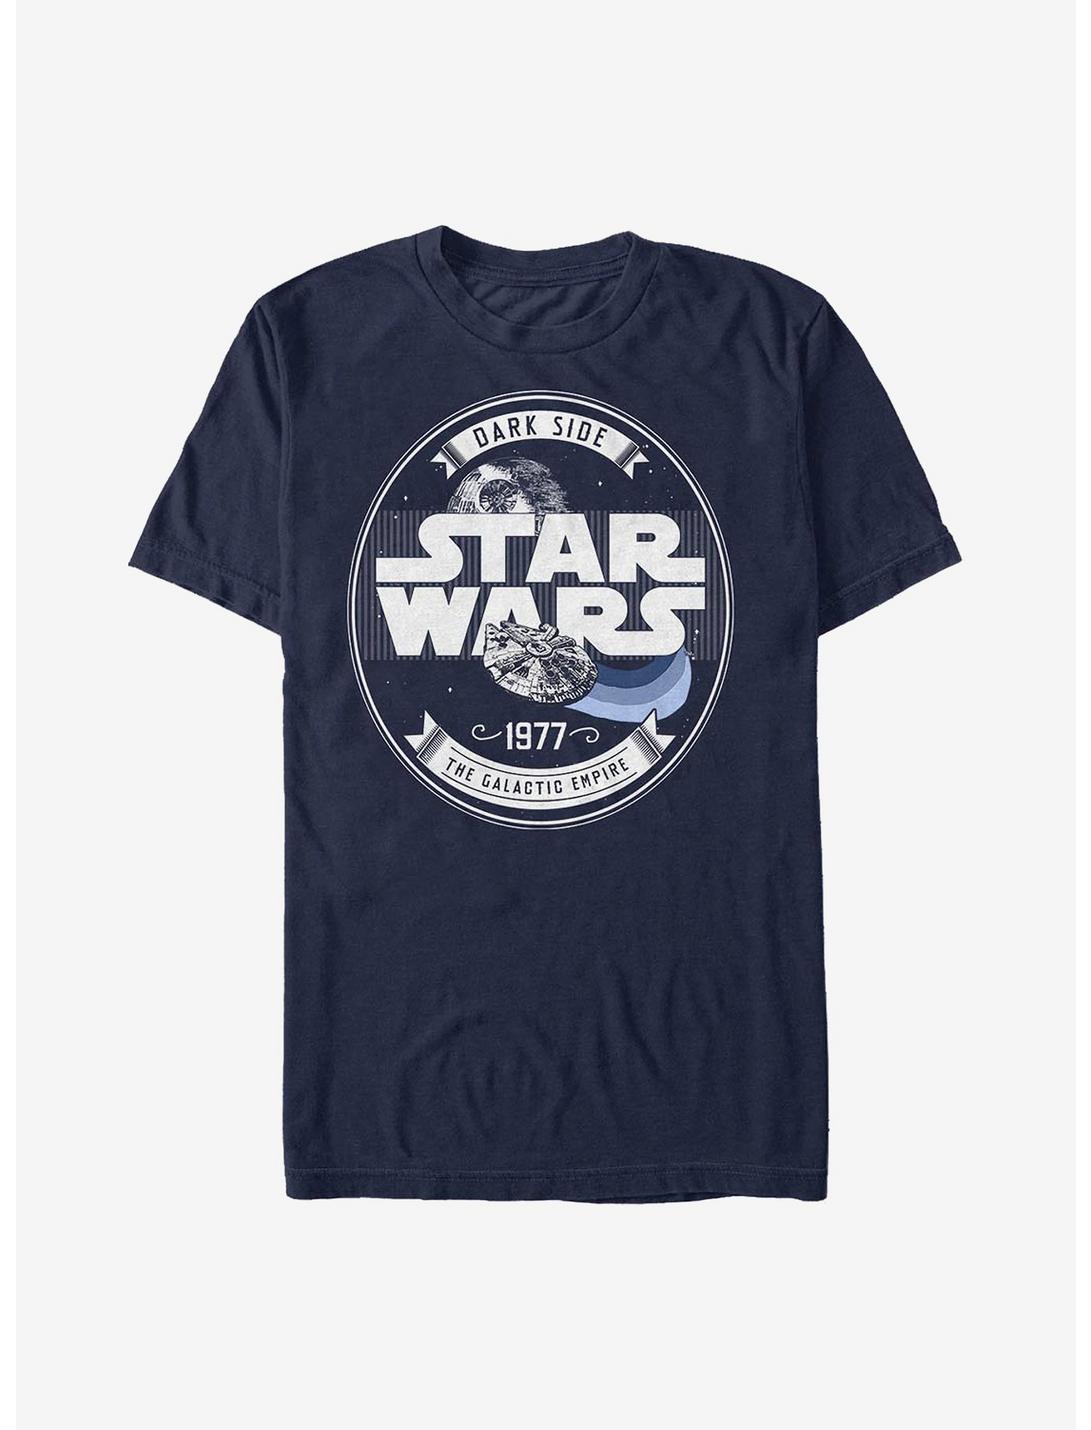 Star Wars Star Propaganda T-Shirt, NAVY, hi-res